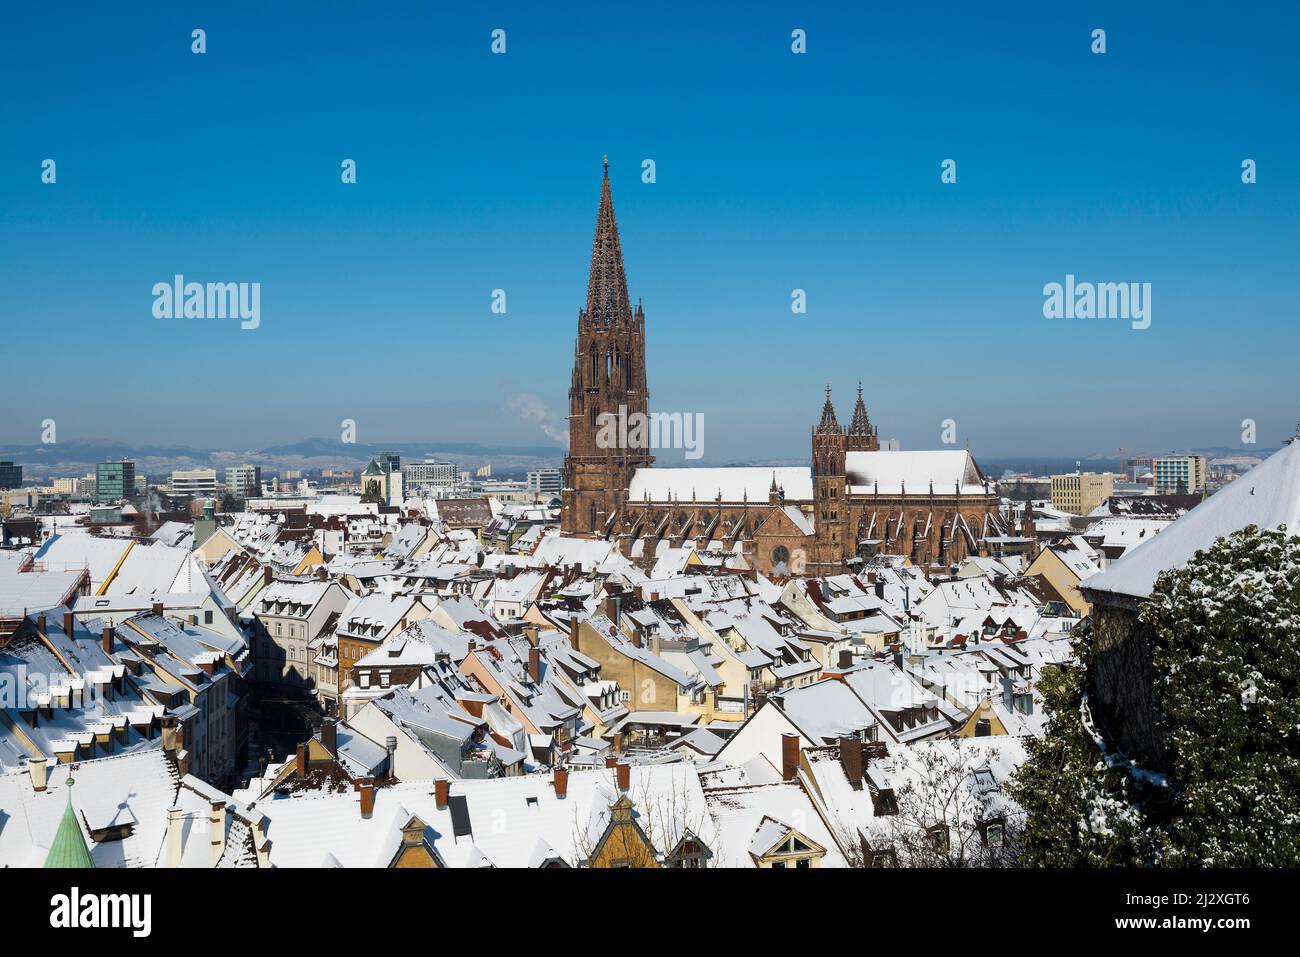 Winter mood with snow, Freiburg Minster, Freiburg im Breisgau, Black Forest, Baden-Württemberg, Germany Stock Photo